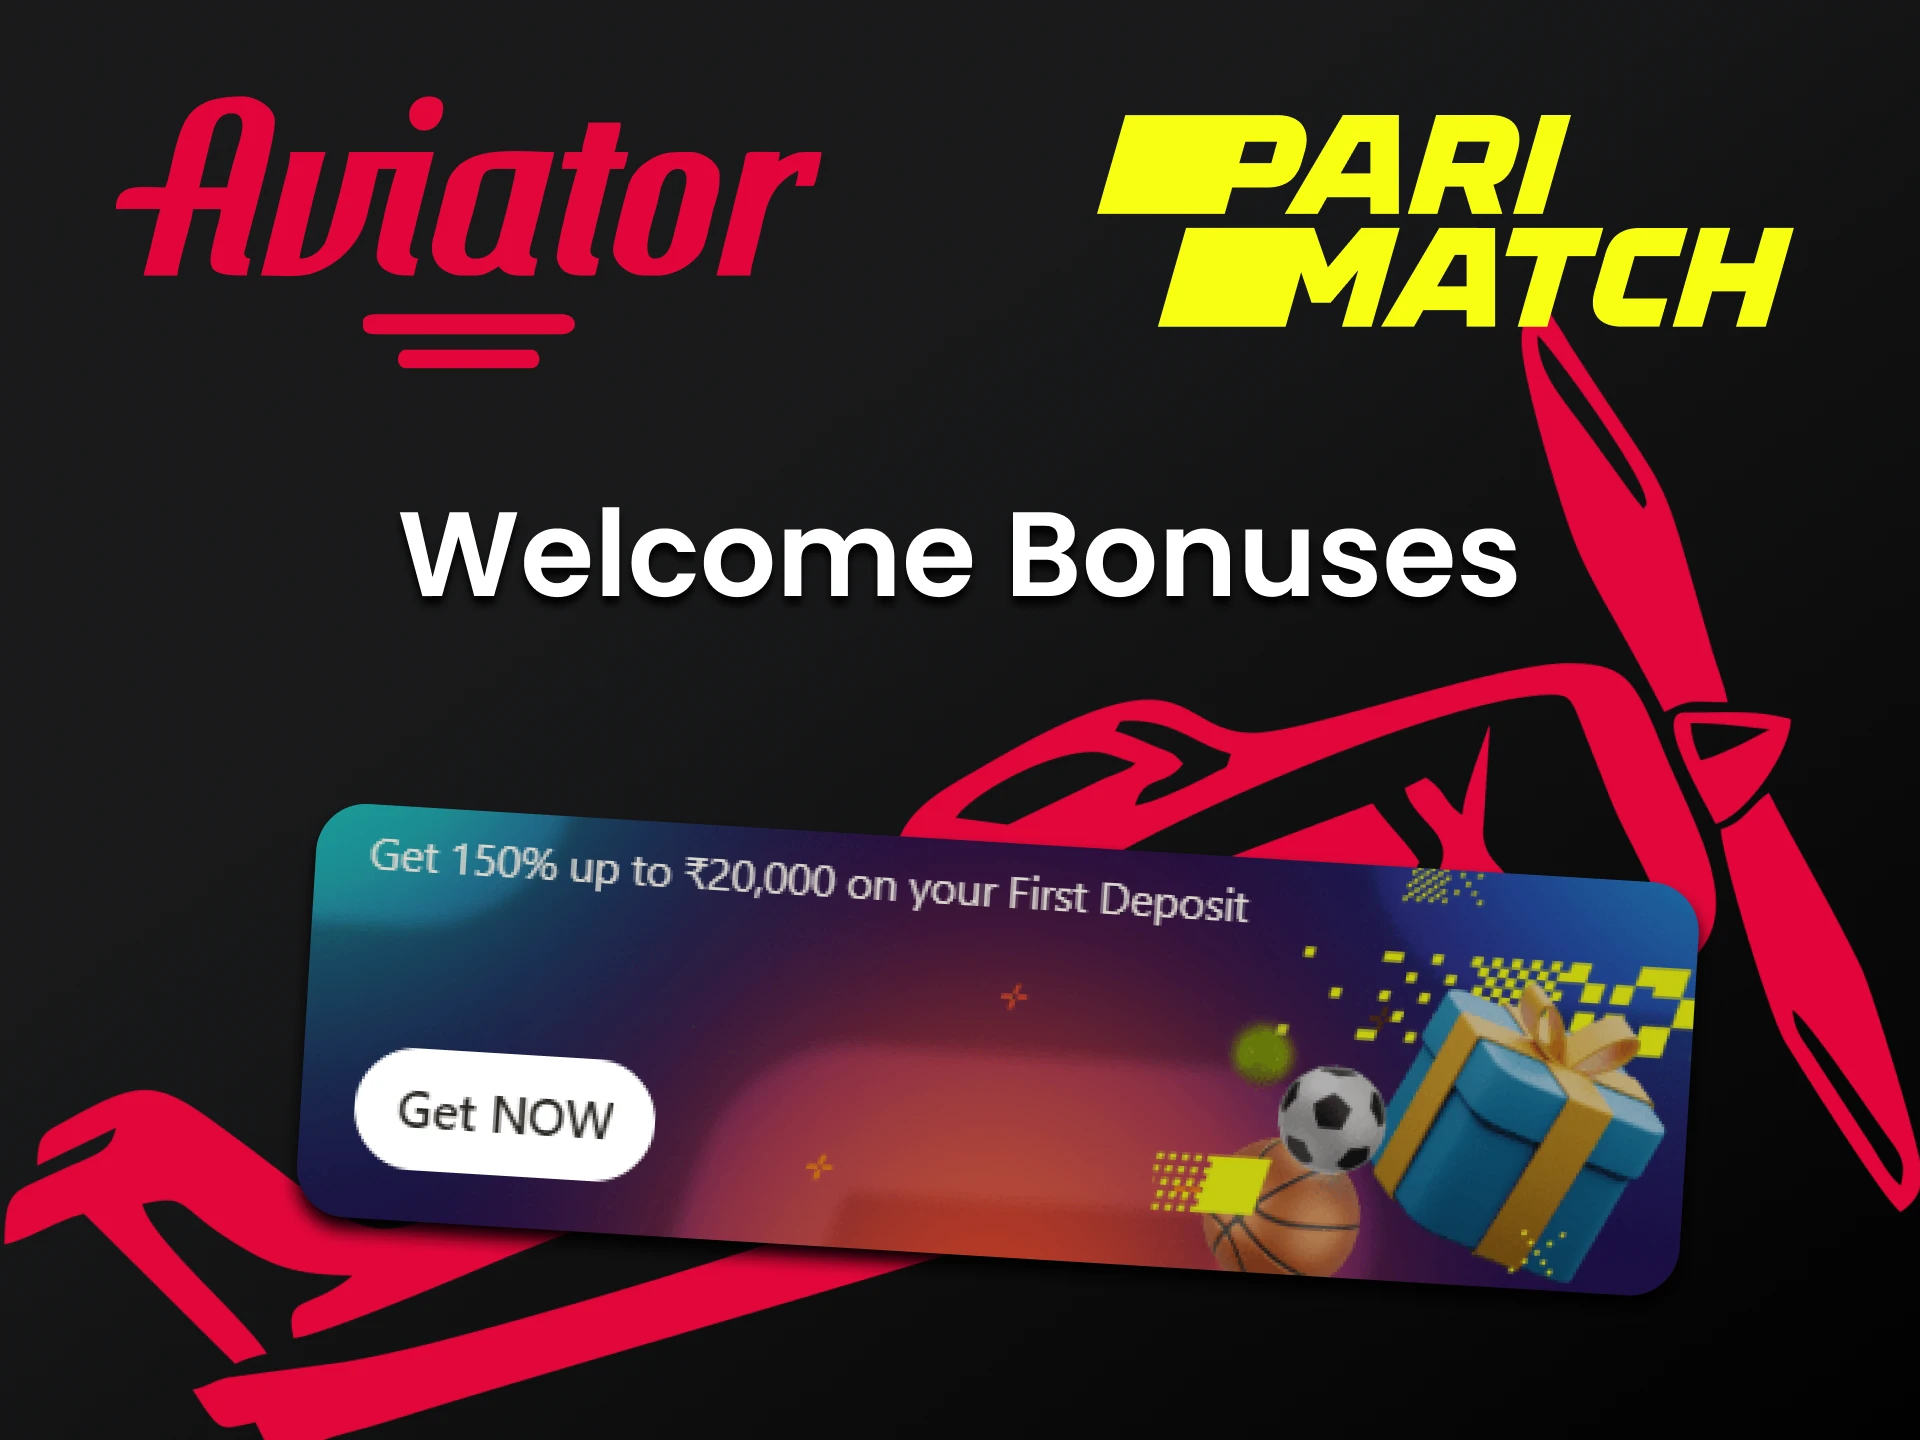 By choosing Parimatch to play Aviator you get bonuses.